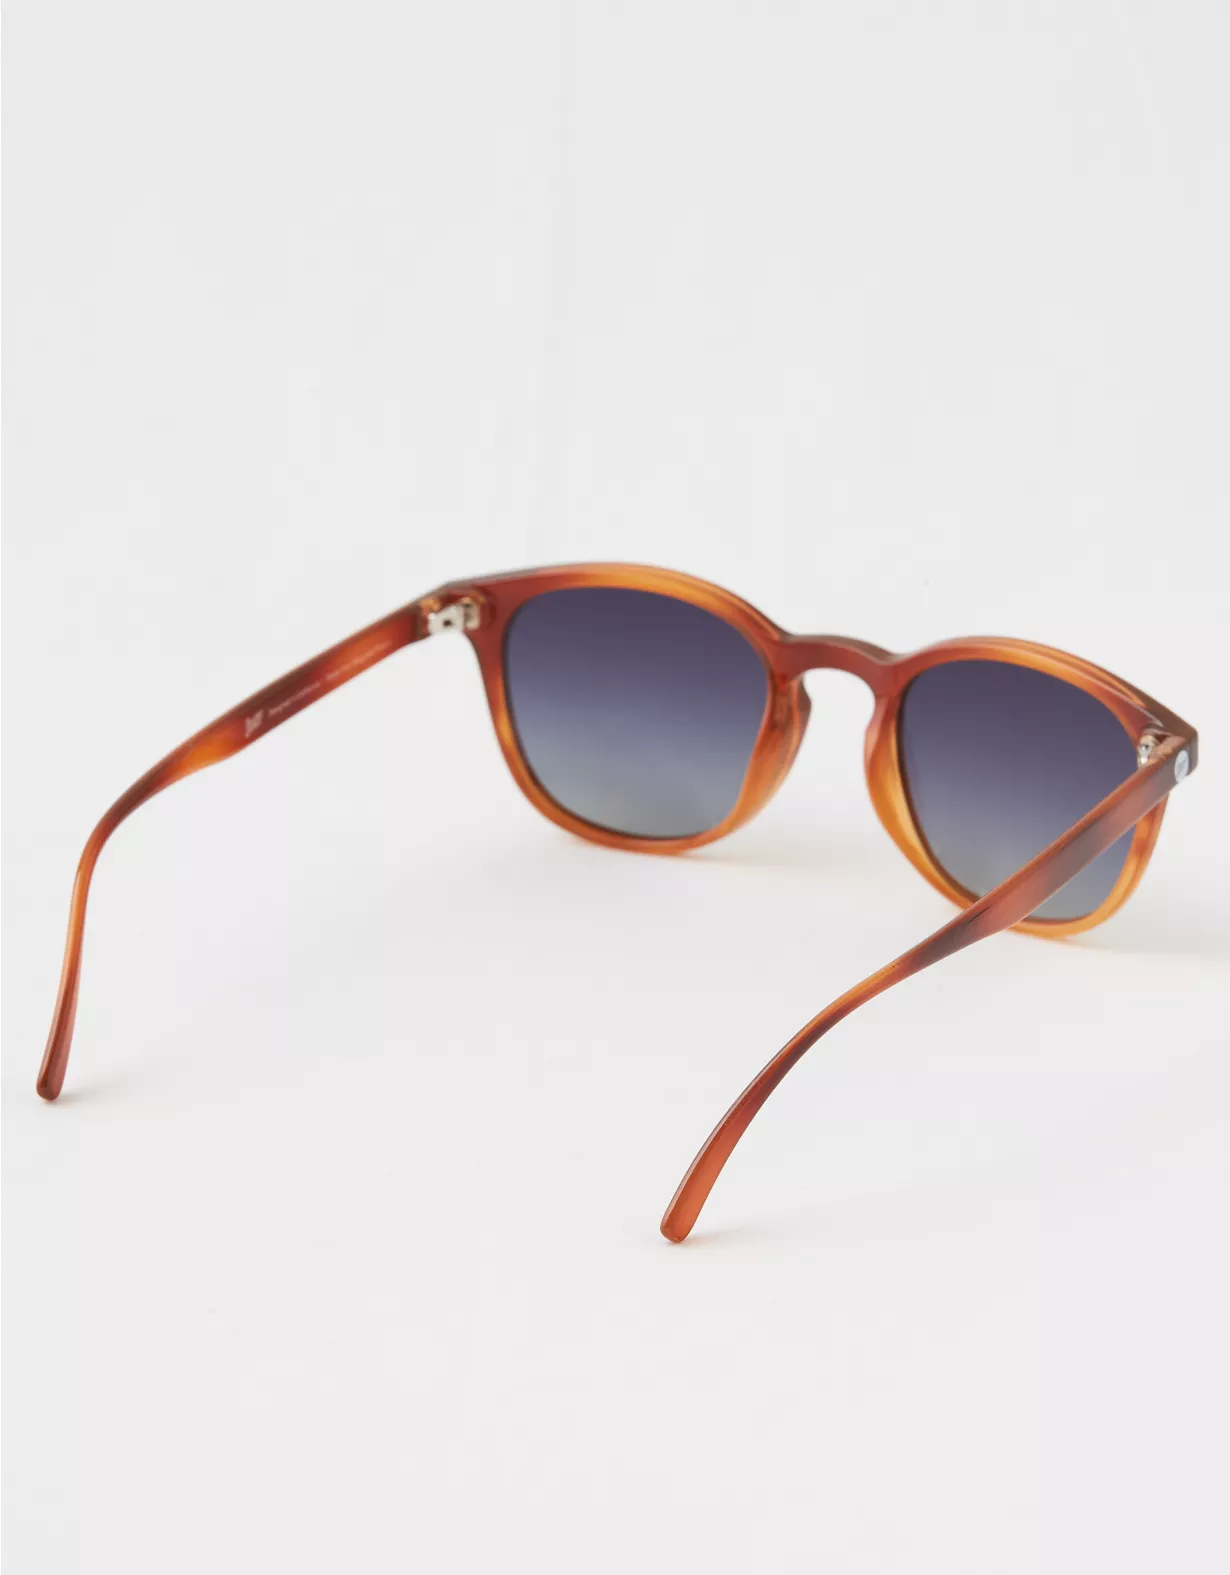 Sunski Yuba Caramel Ocean Sunglasses